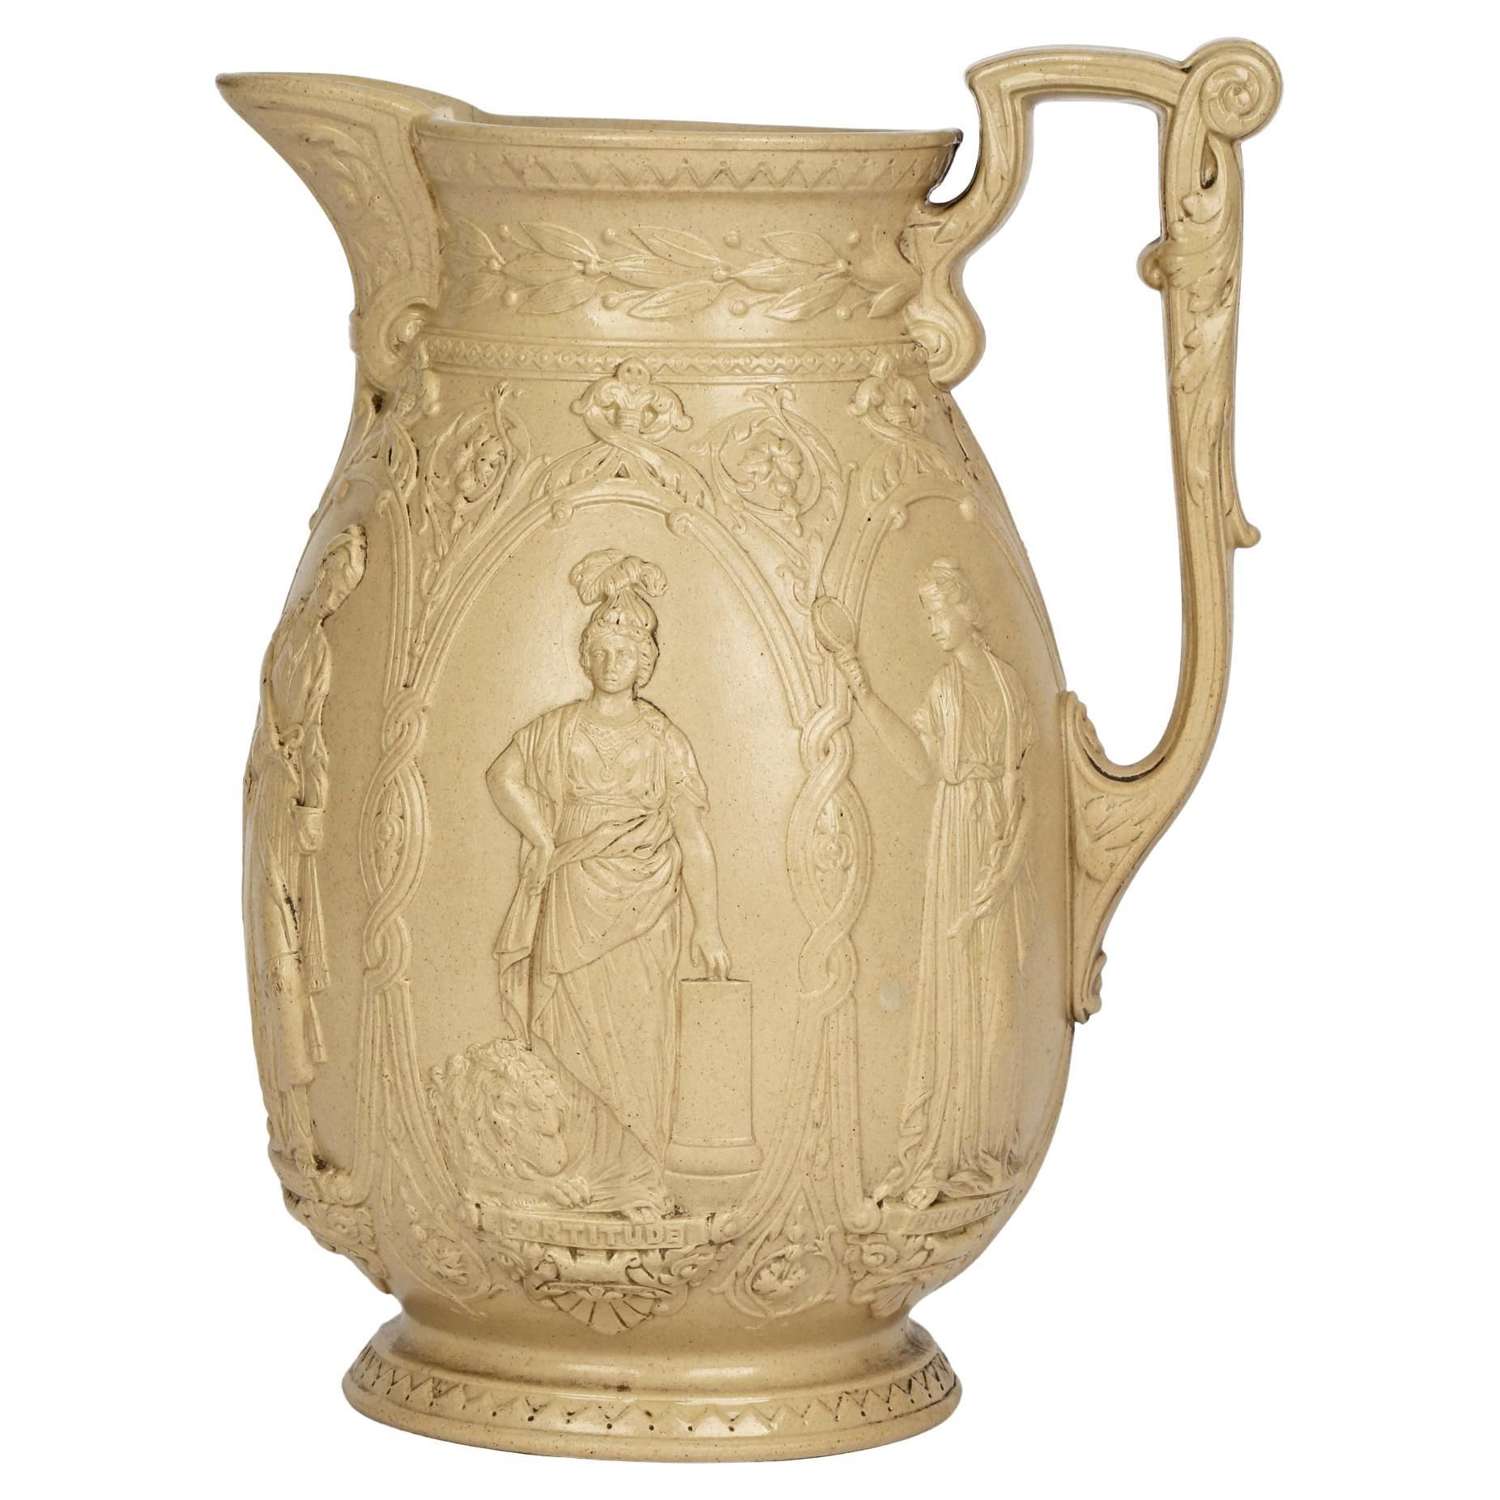 Old Hall Drabware Ceramic Jug with Female Cardinal Virtues Figures